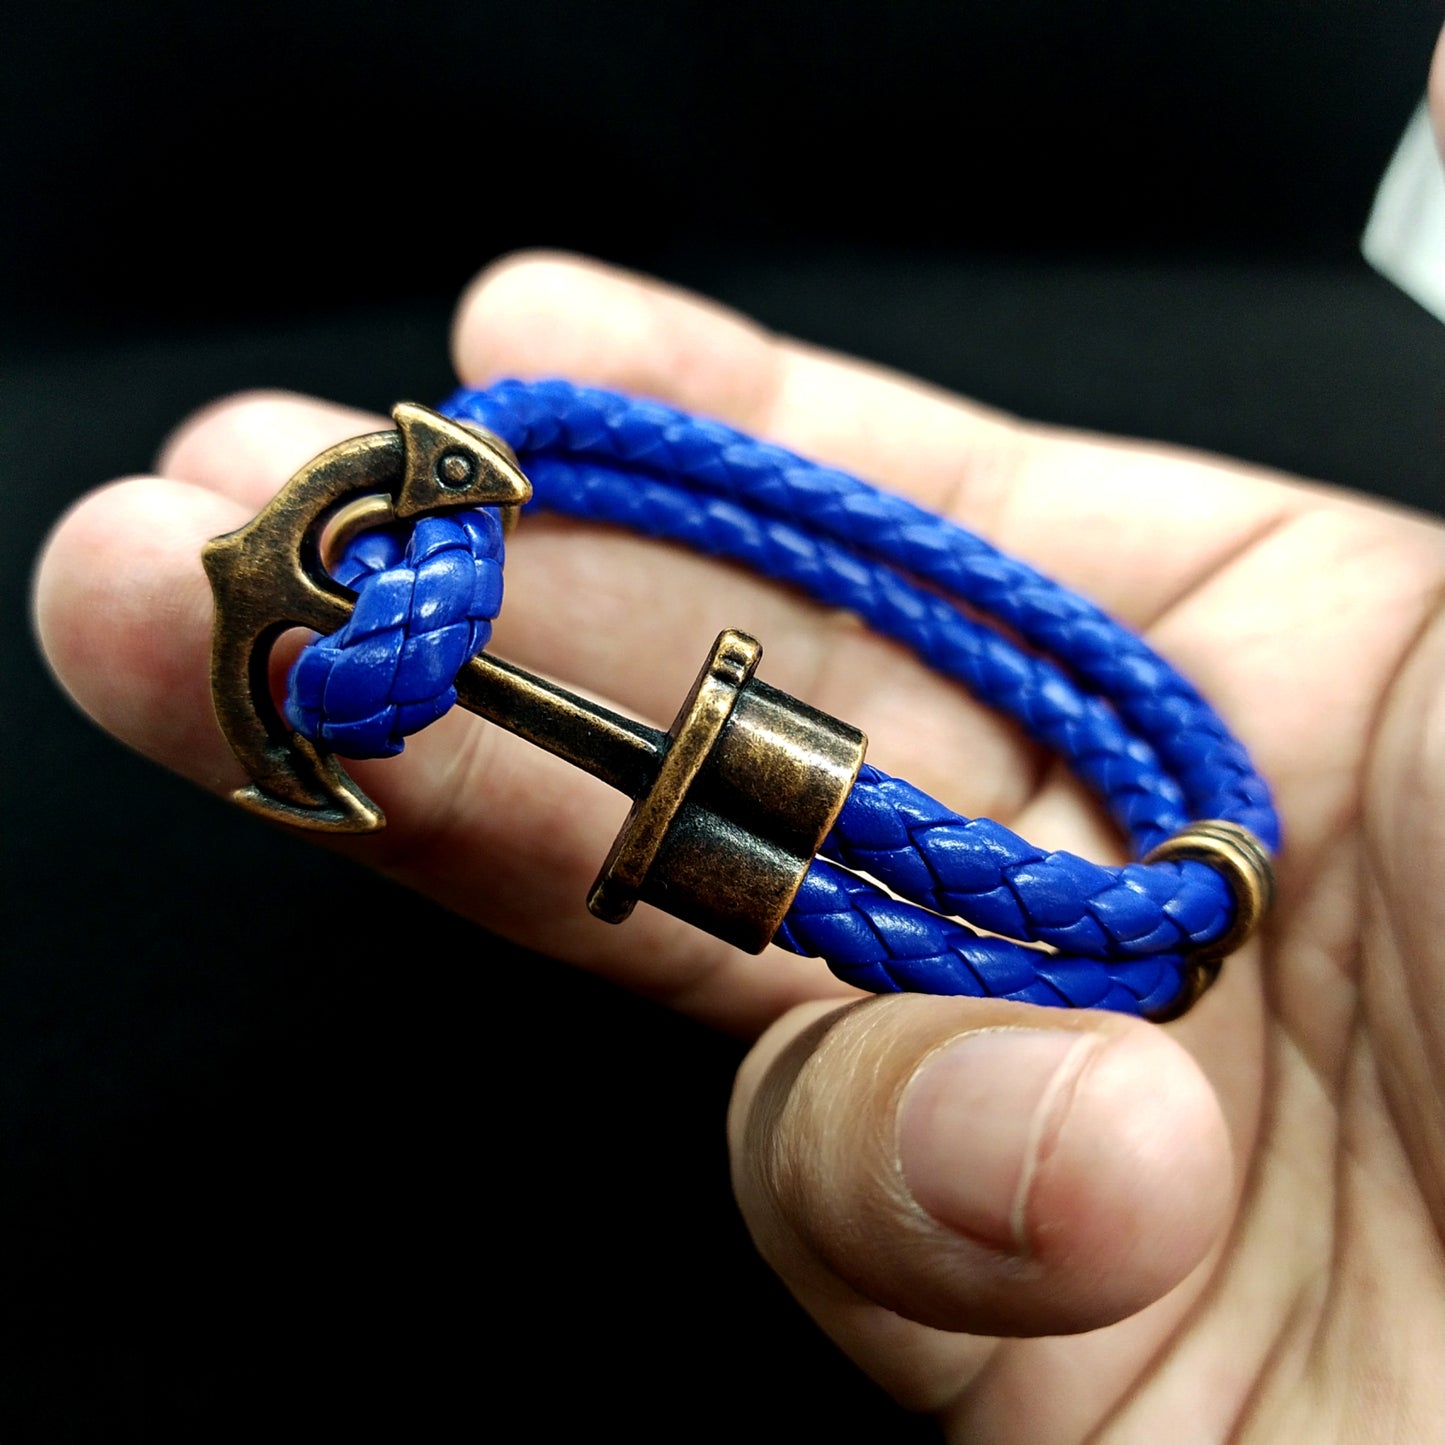 Blue Anchor Rope Leather Bracelet For Men